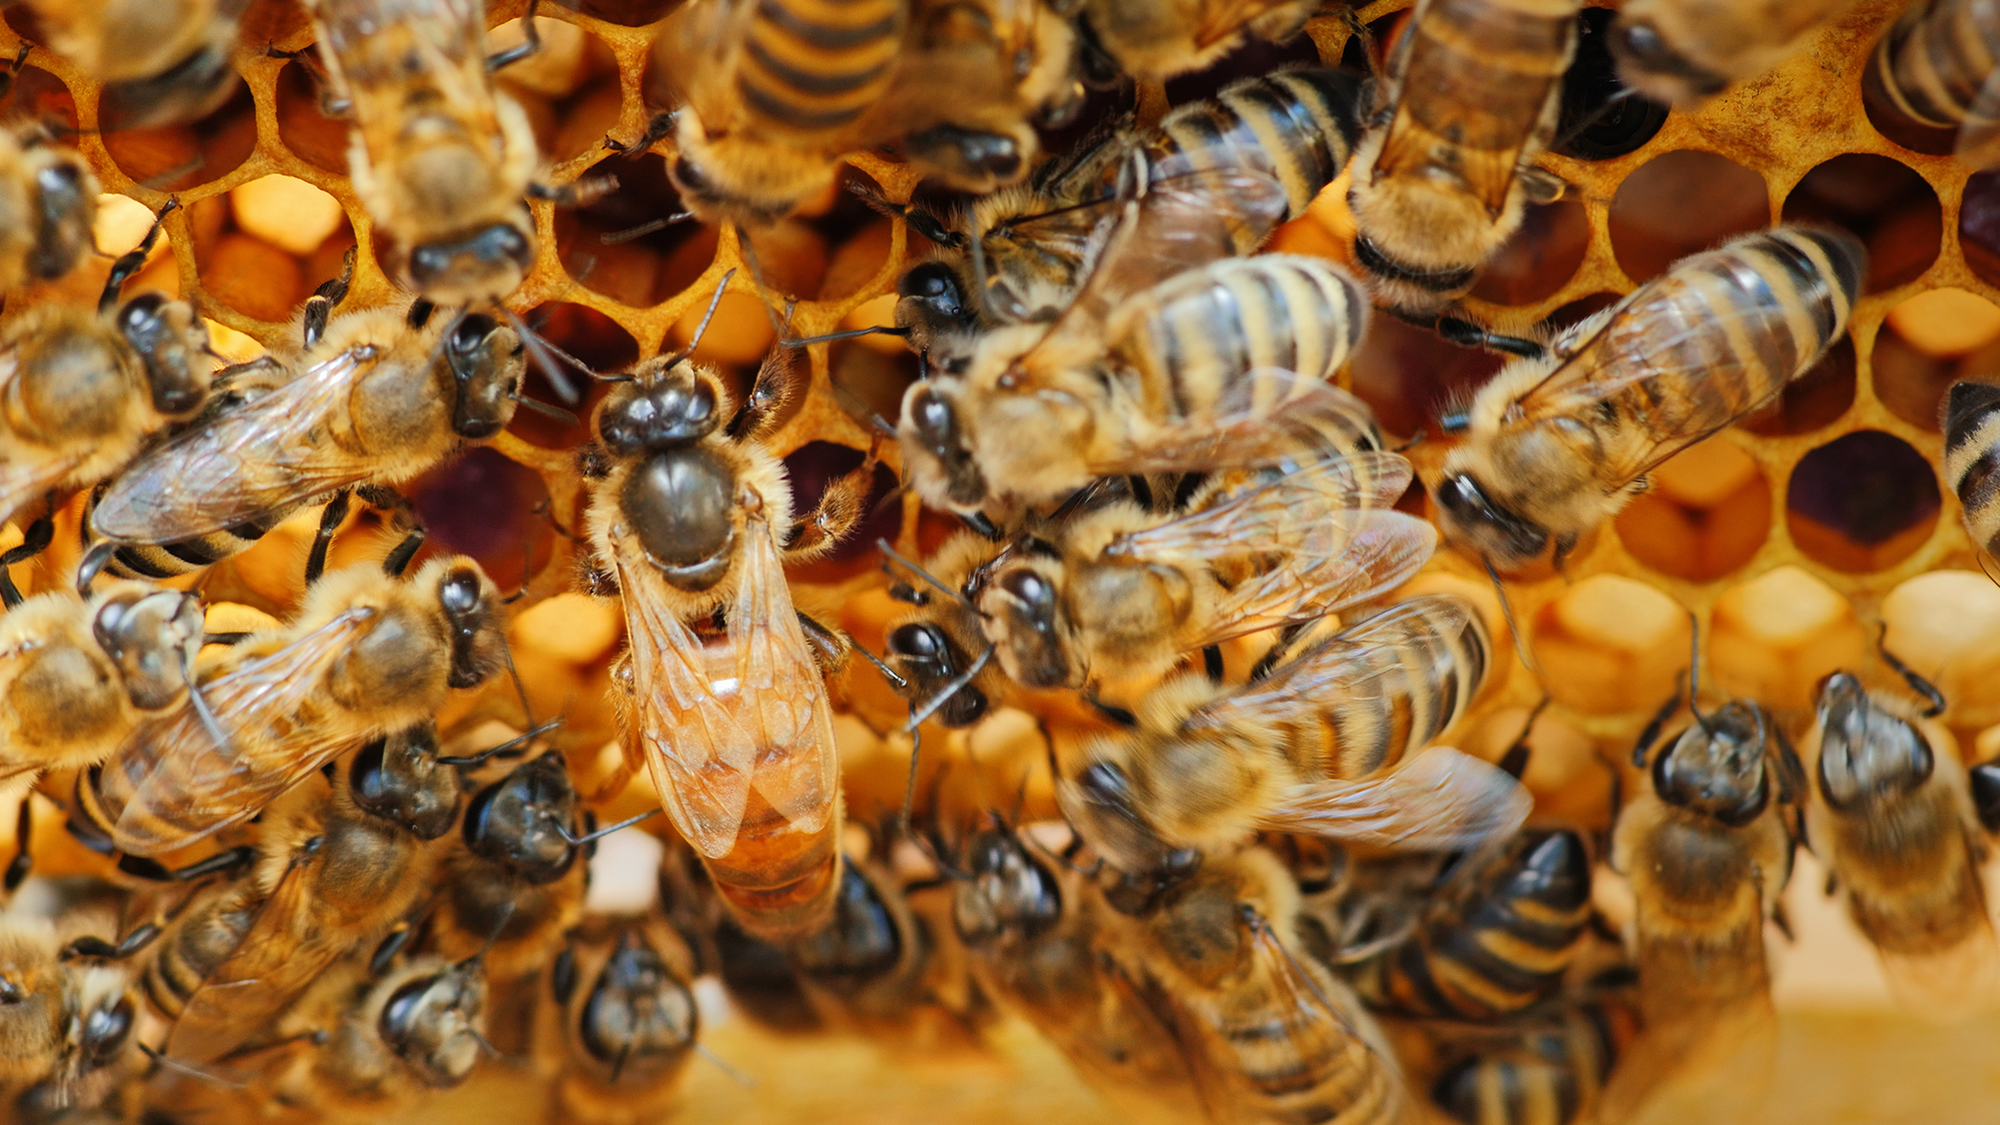 Miller Manufacturing - Beekeeping for Dummies - Murdoch's